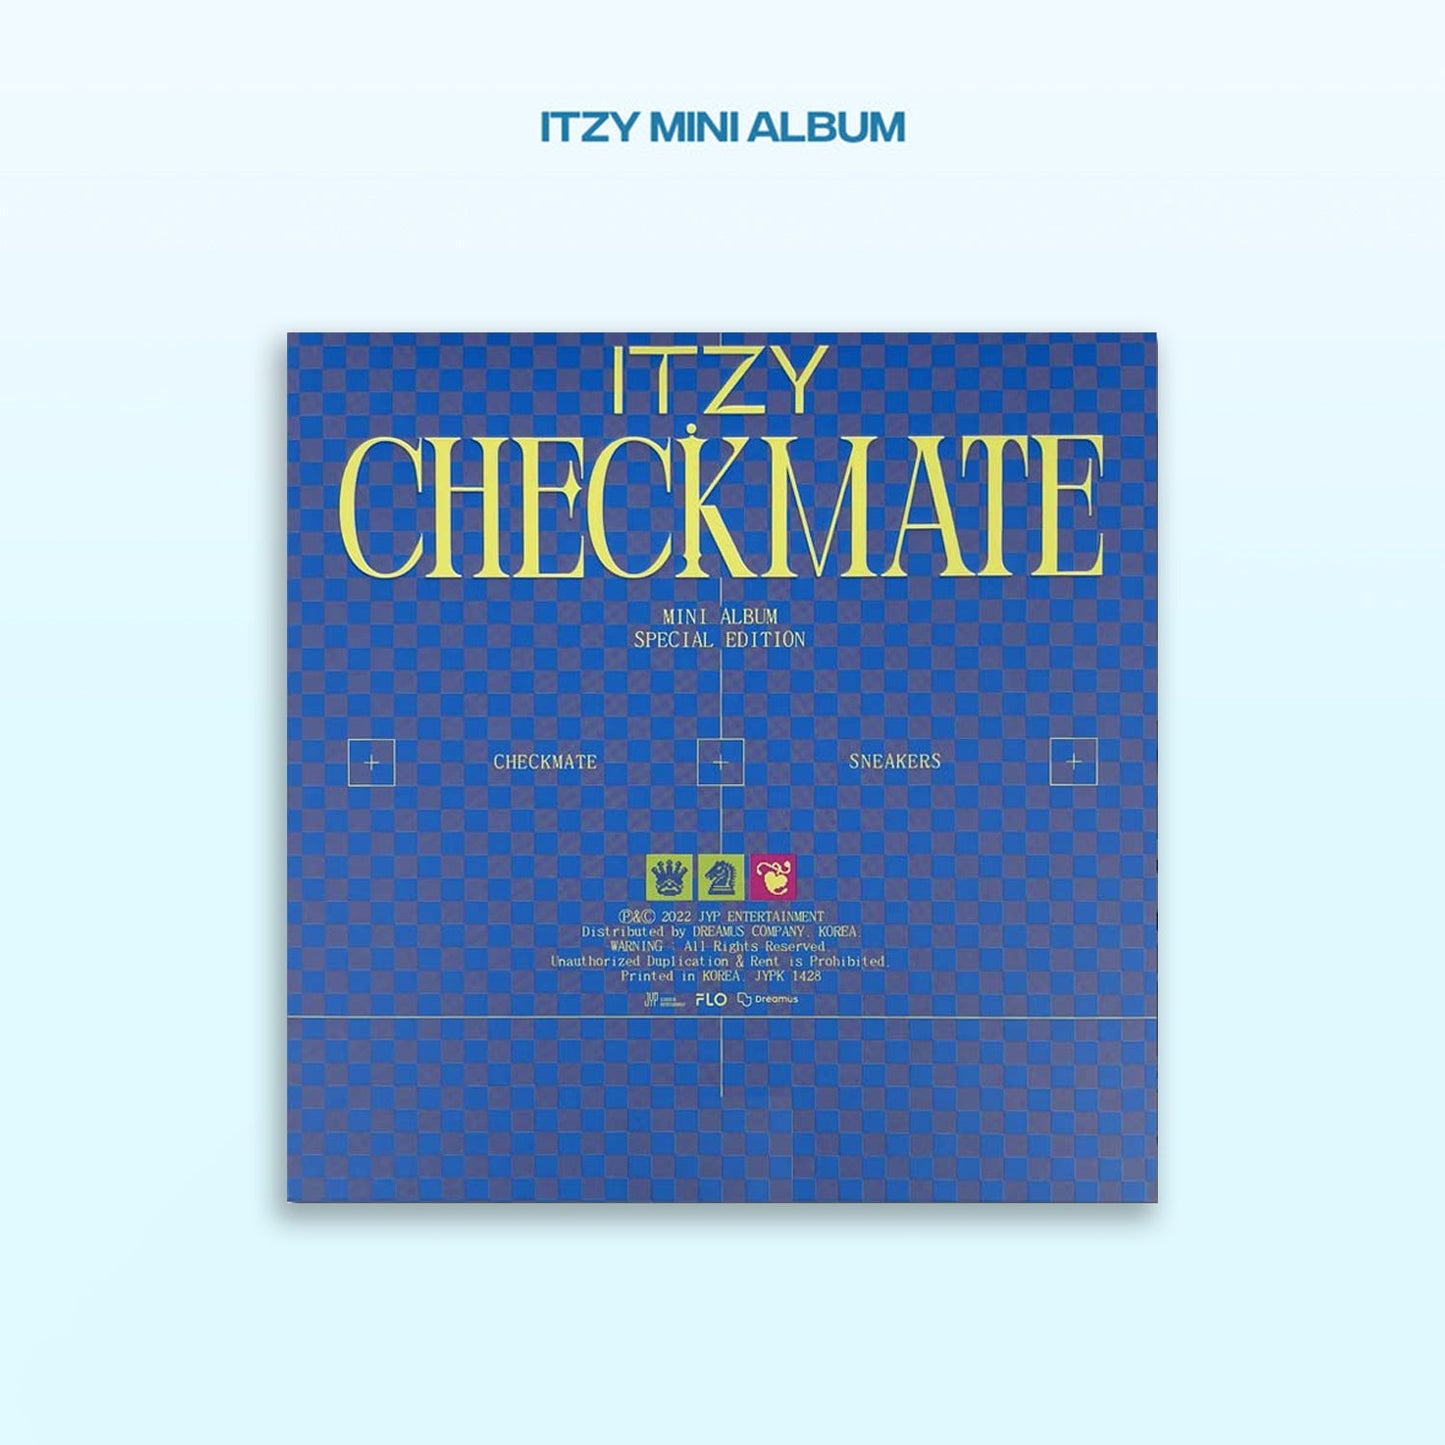 Itzy Mini Album - Checkmate (Special Edition)